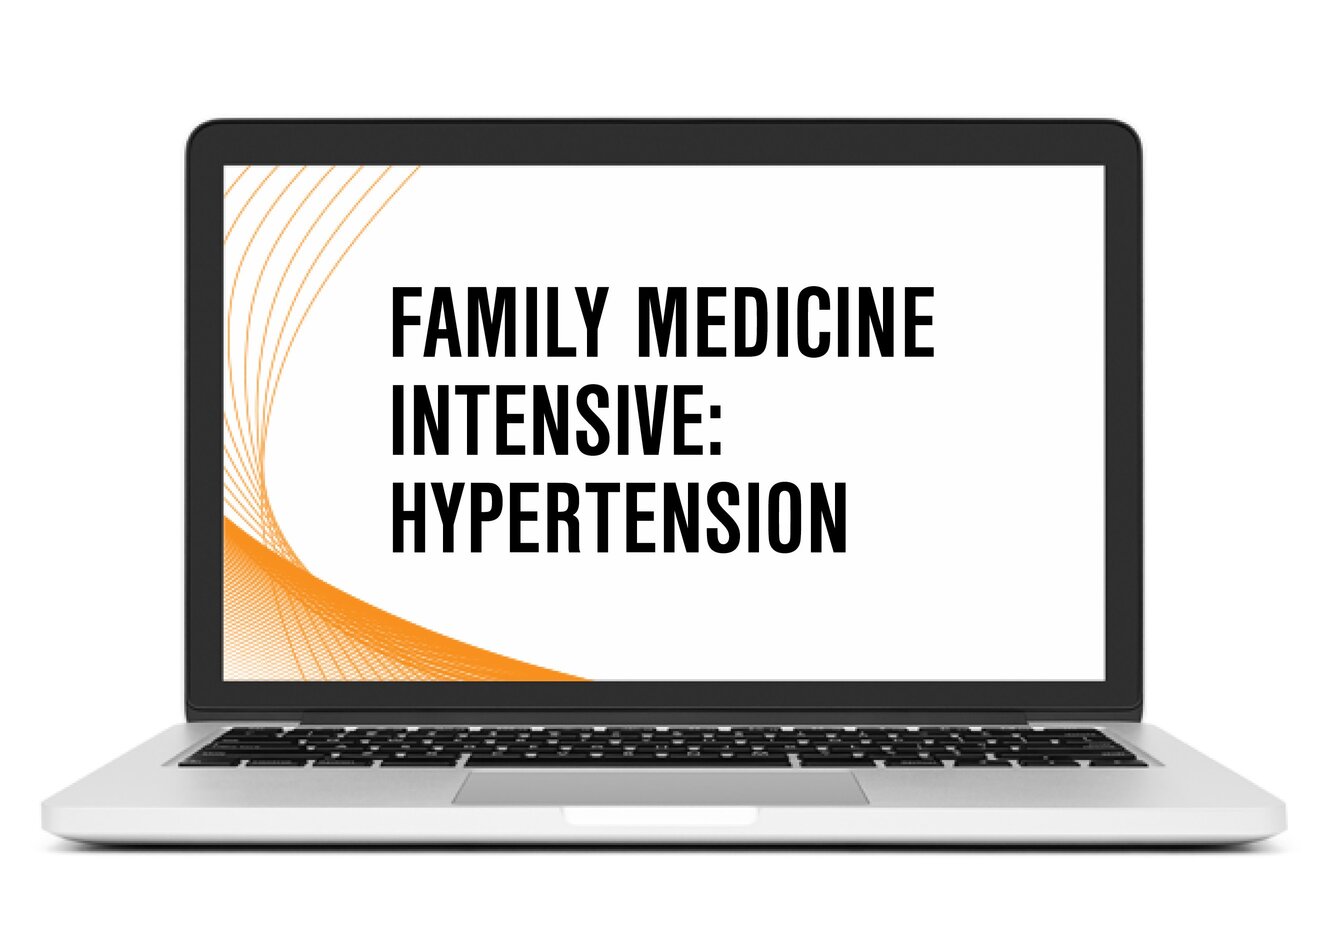 Family Medicine Intensive: Hypertension Title on Laptop